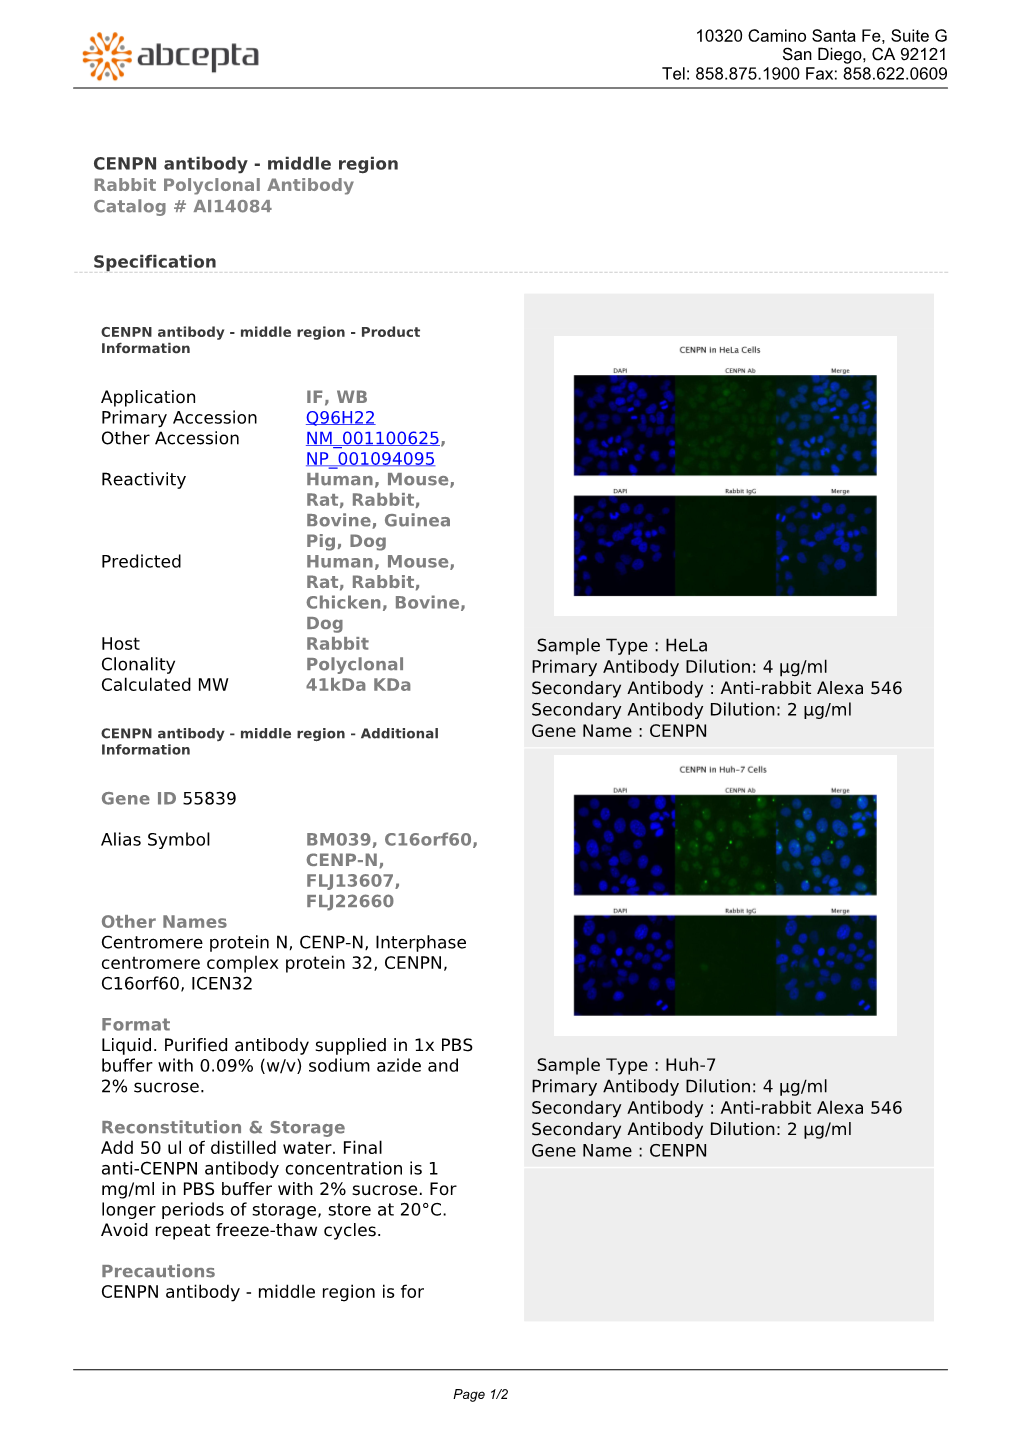 CENPN Antibody - Middle Region Rabbit Polyclonal Antibody Catalog # AI14084